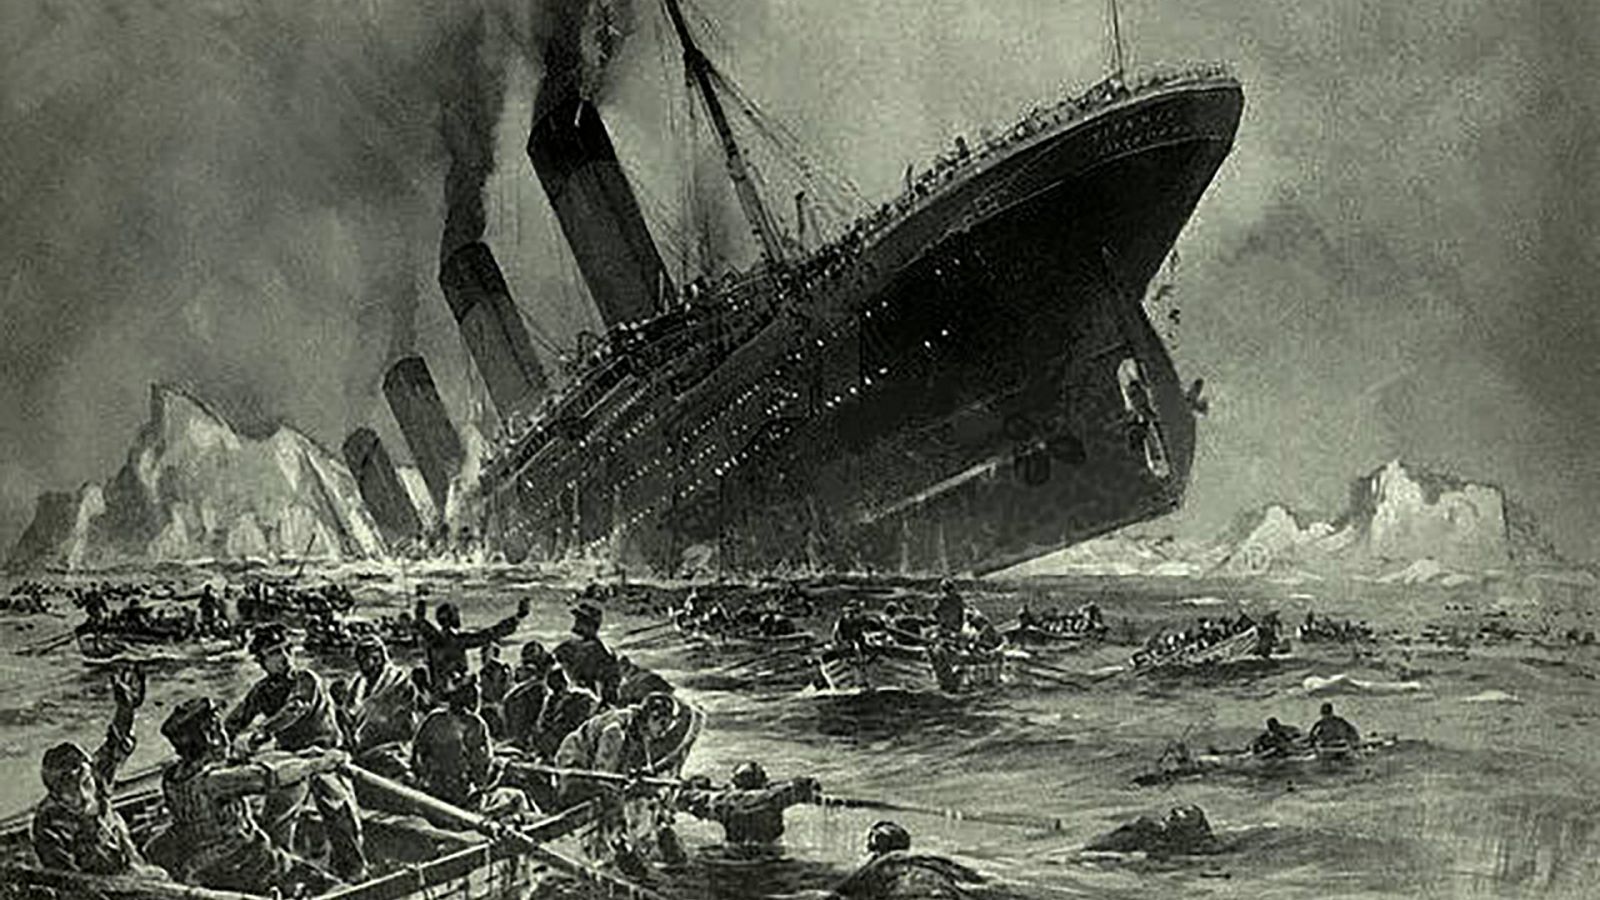 Órbita Laika - Curiosidades científicas - El hundimiento del Titanic